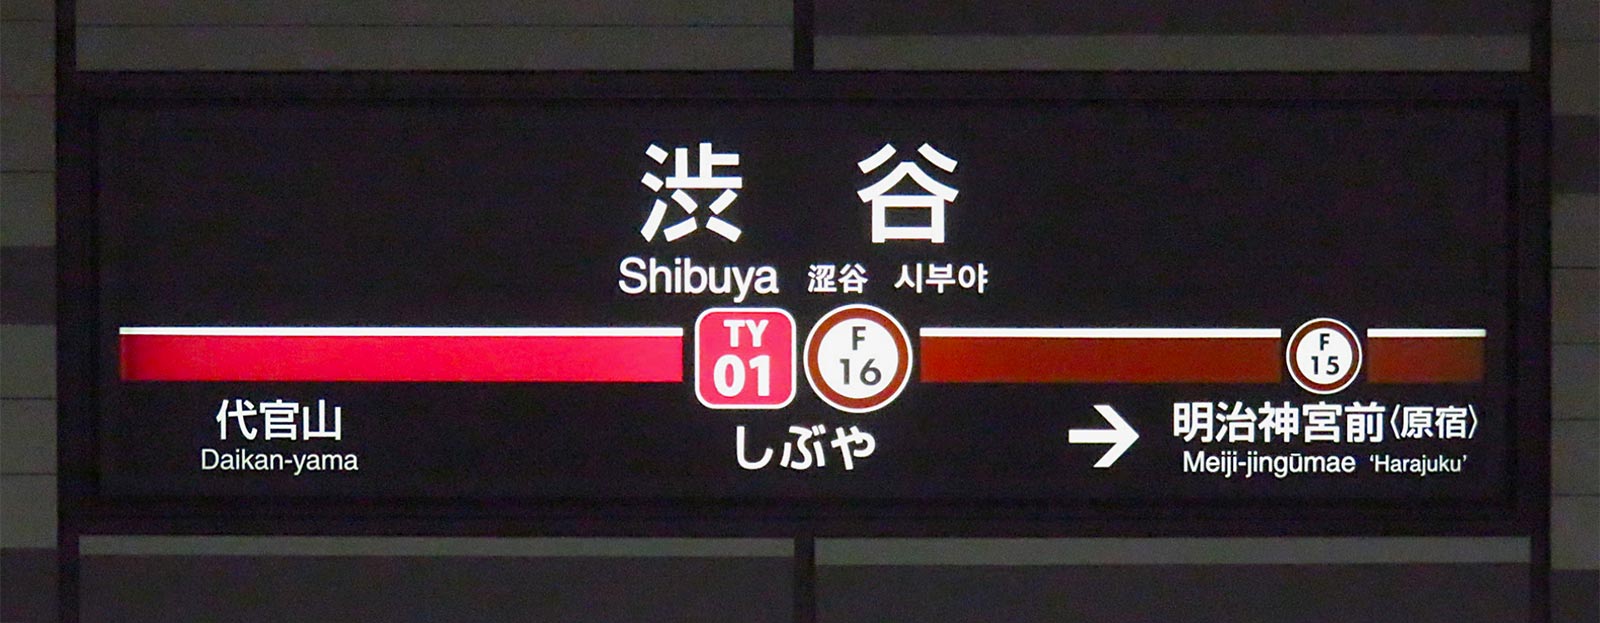 Typografie in Japan, Bahnhofsschild Shibuya